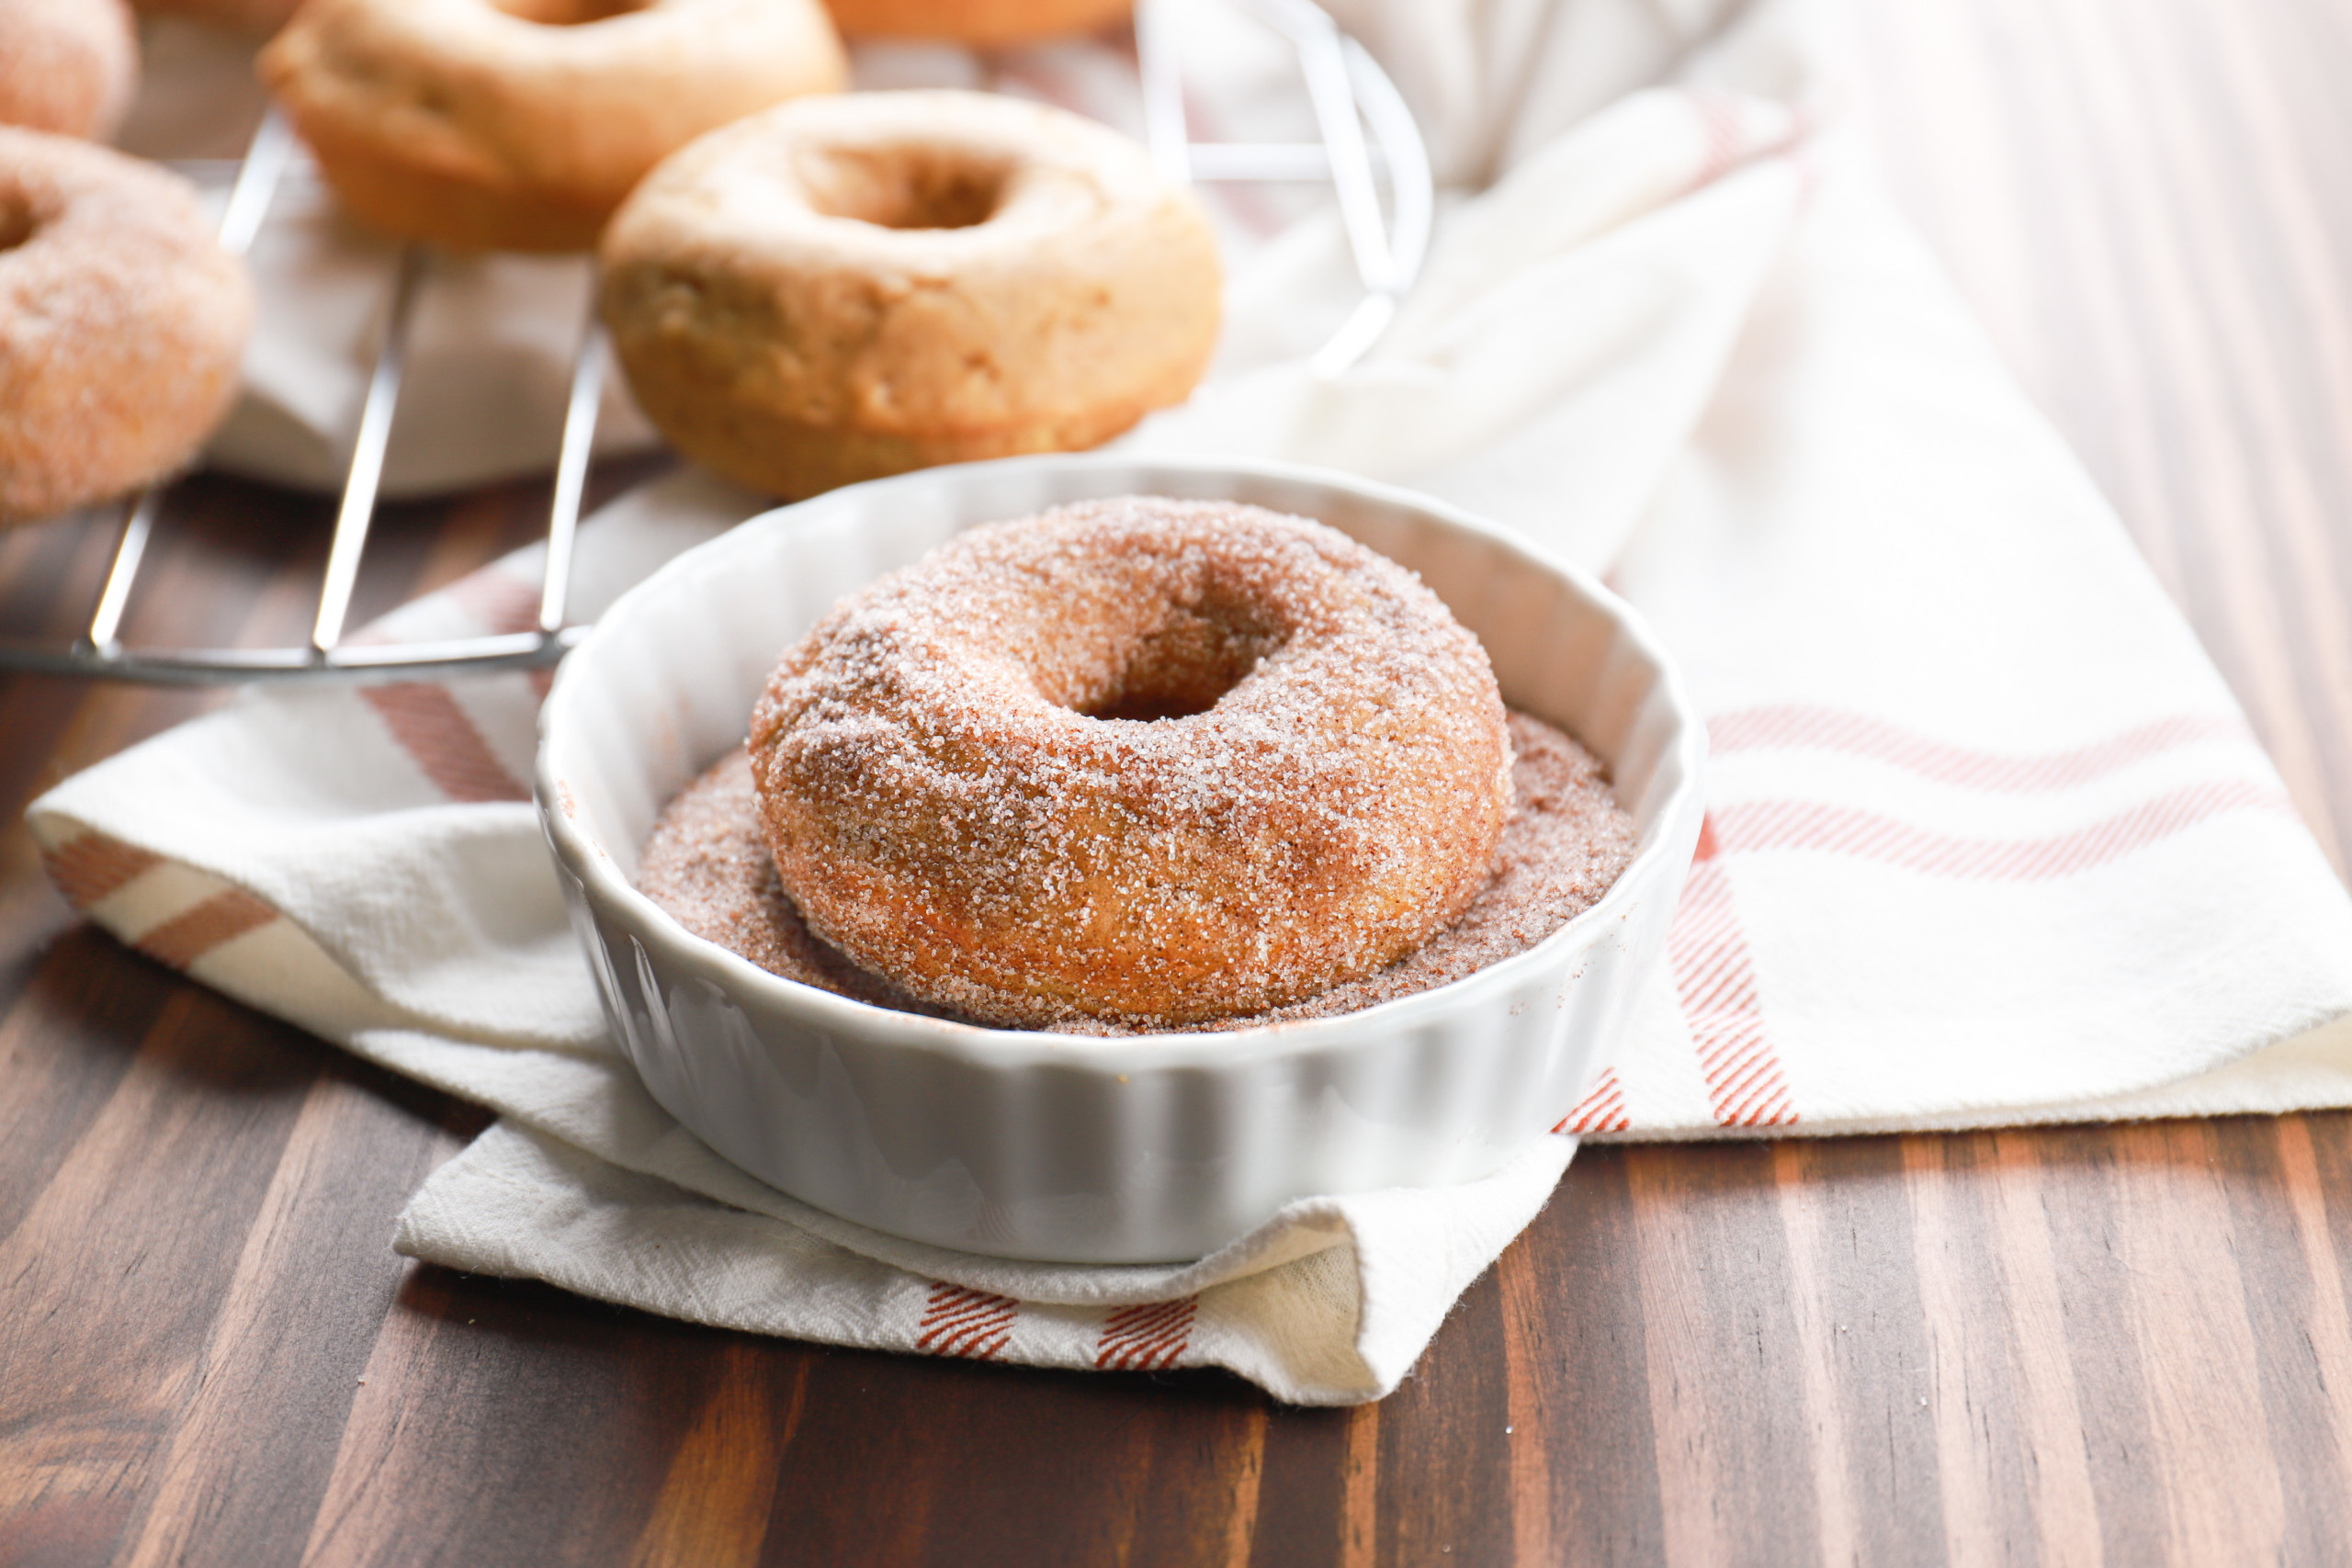 Side view of a cinnamon sugar pumpkin donut in a white bowl filled with cinnamon sugar.